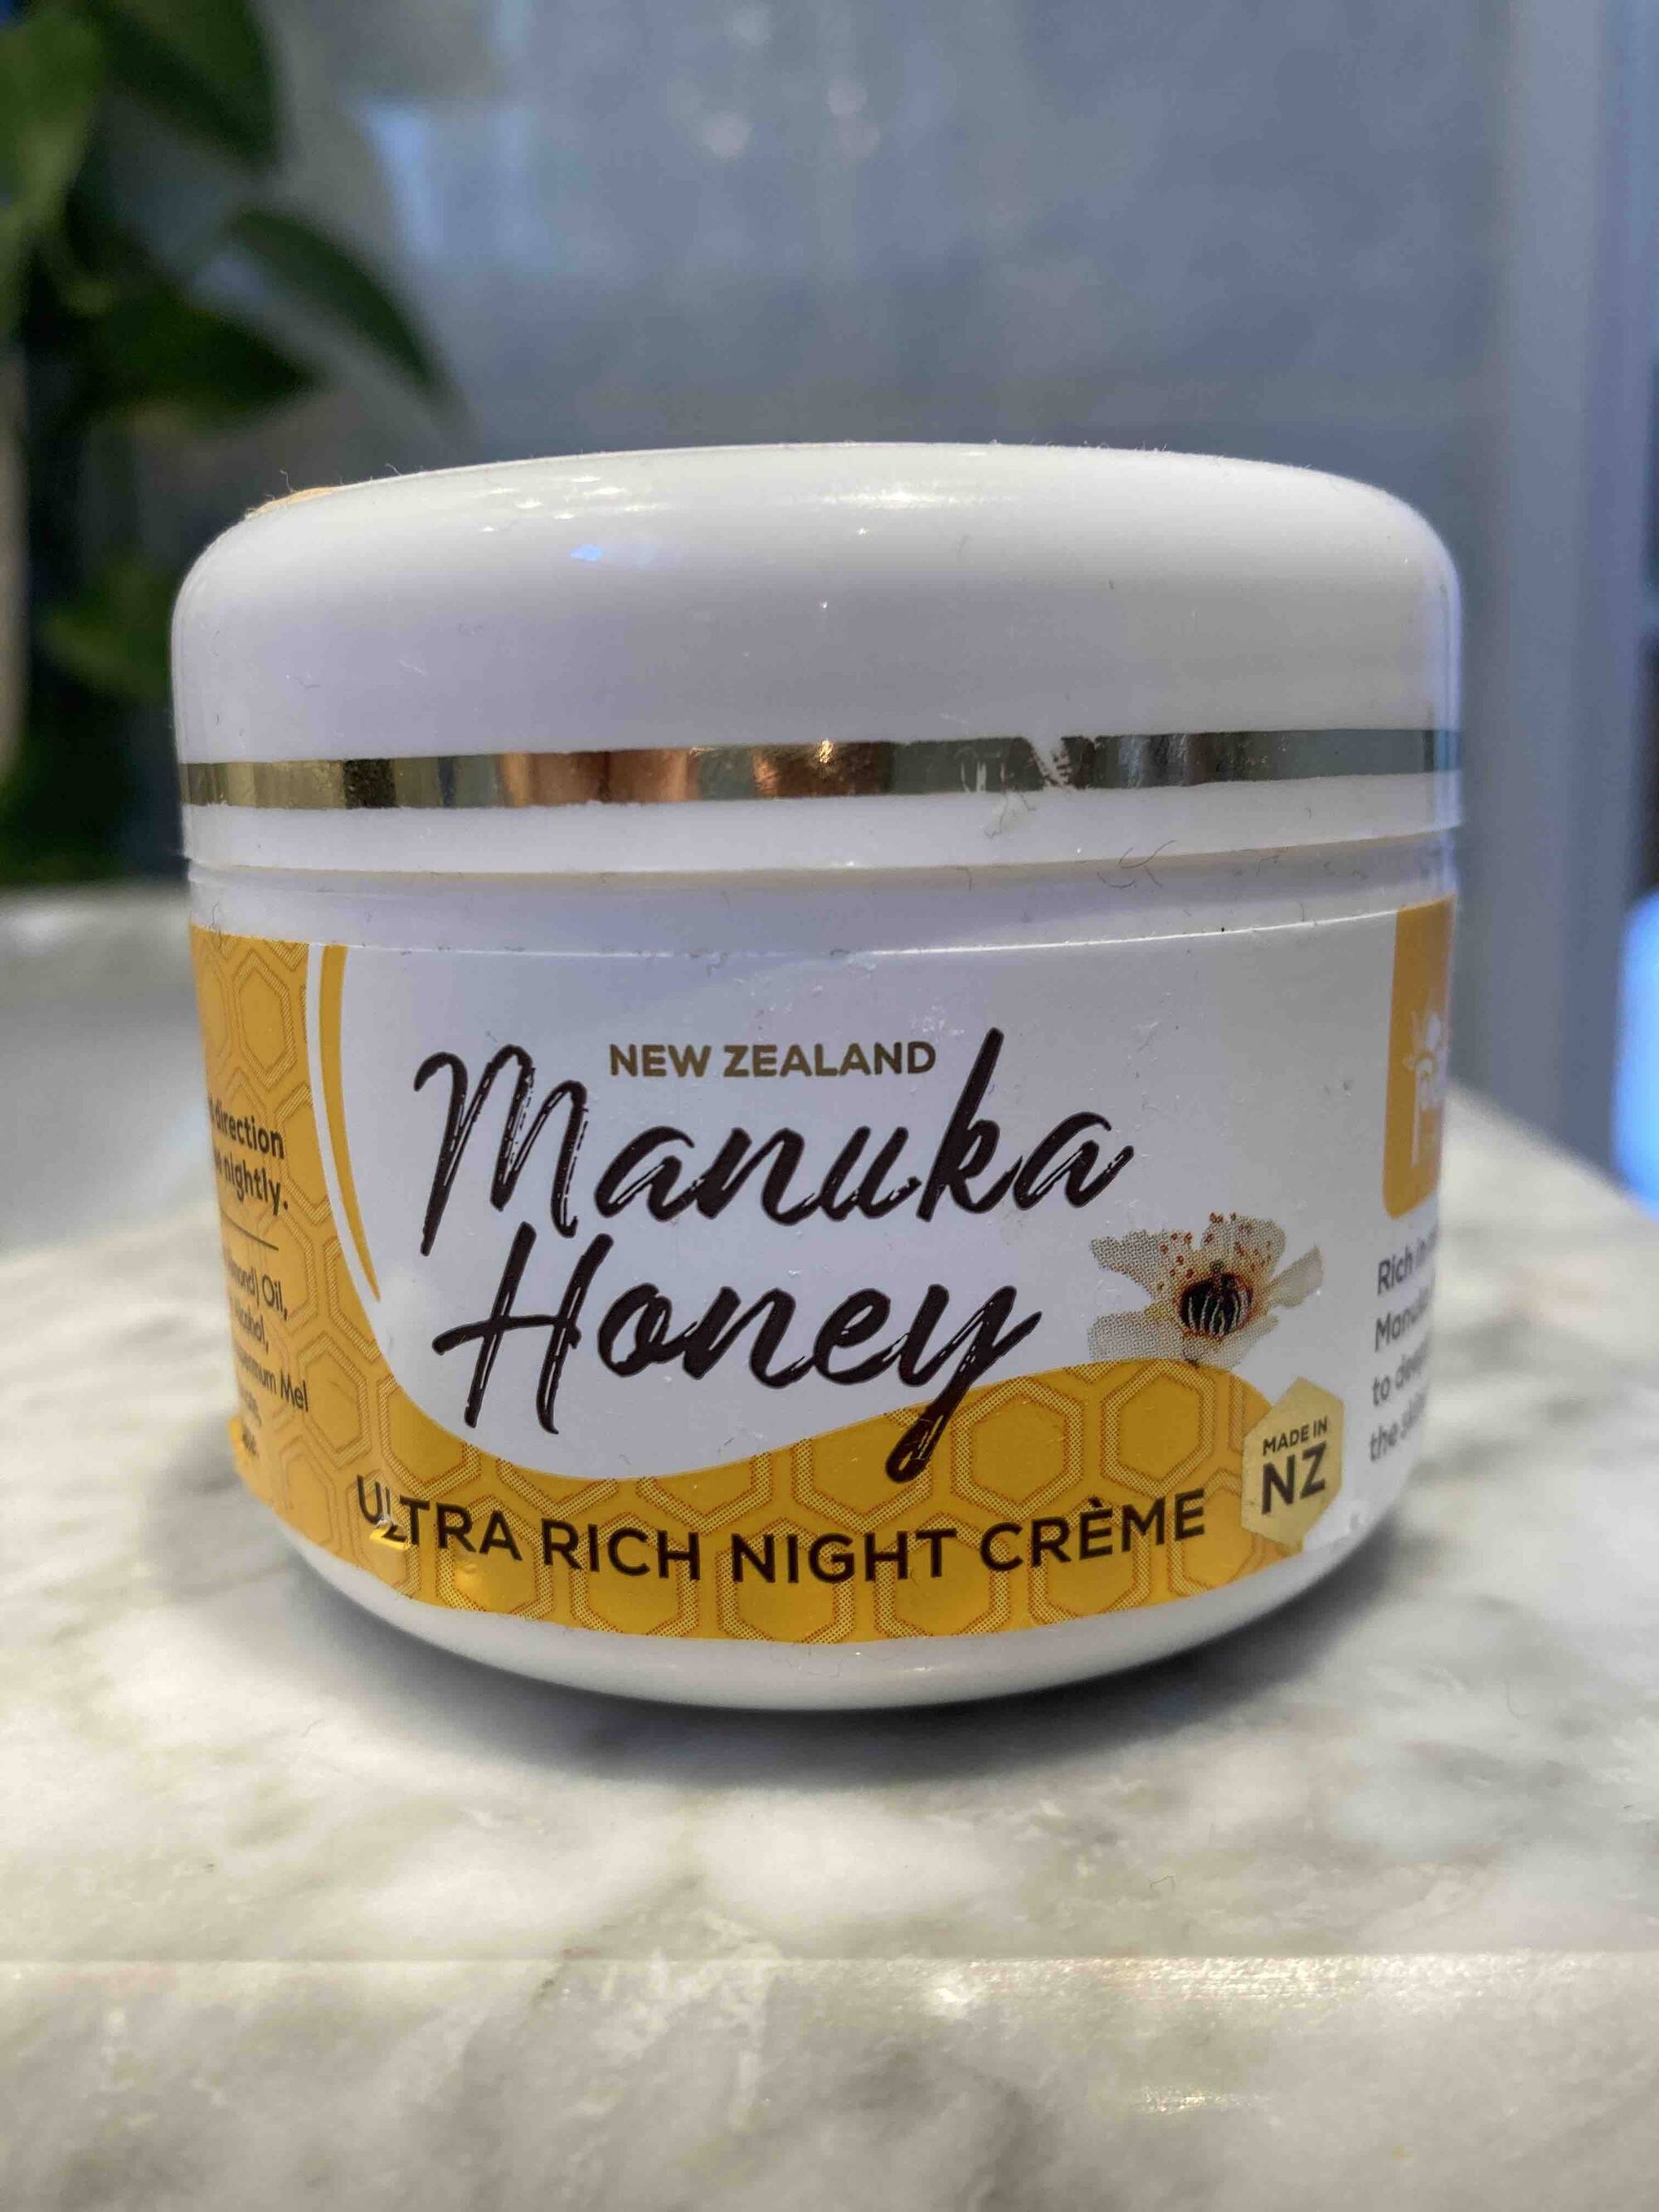 WILD FERNS - Manuka honey - Ultra rich night crème